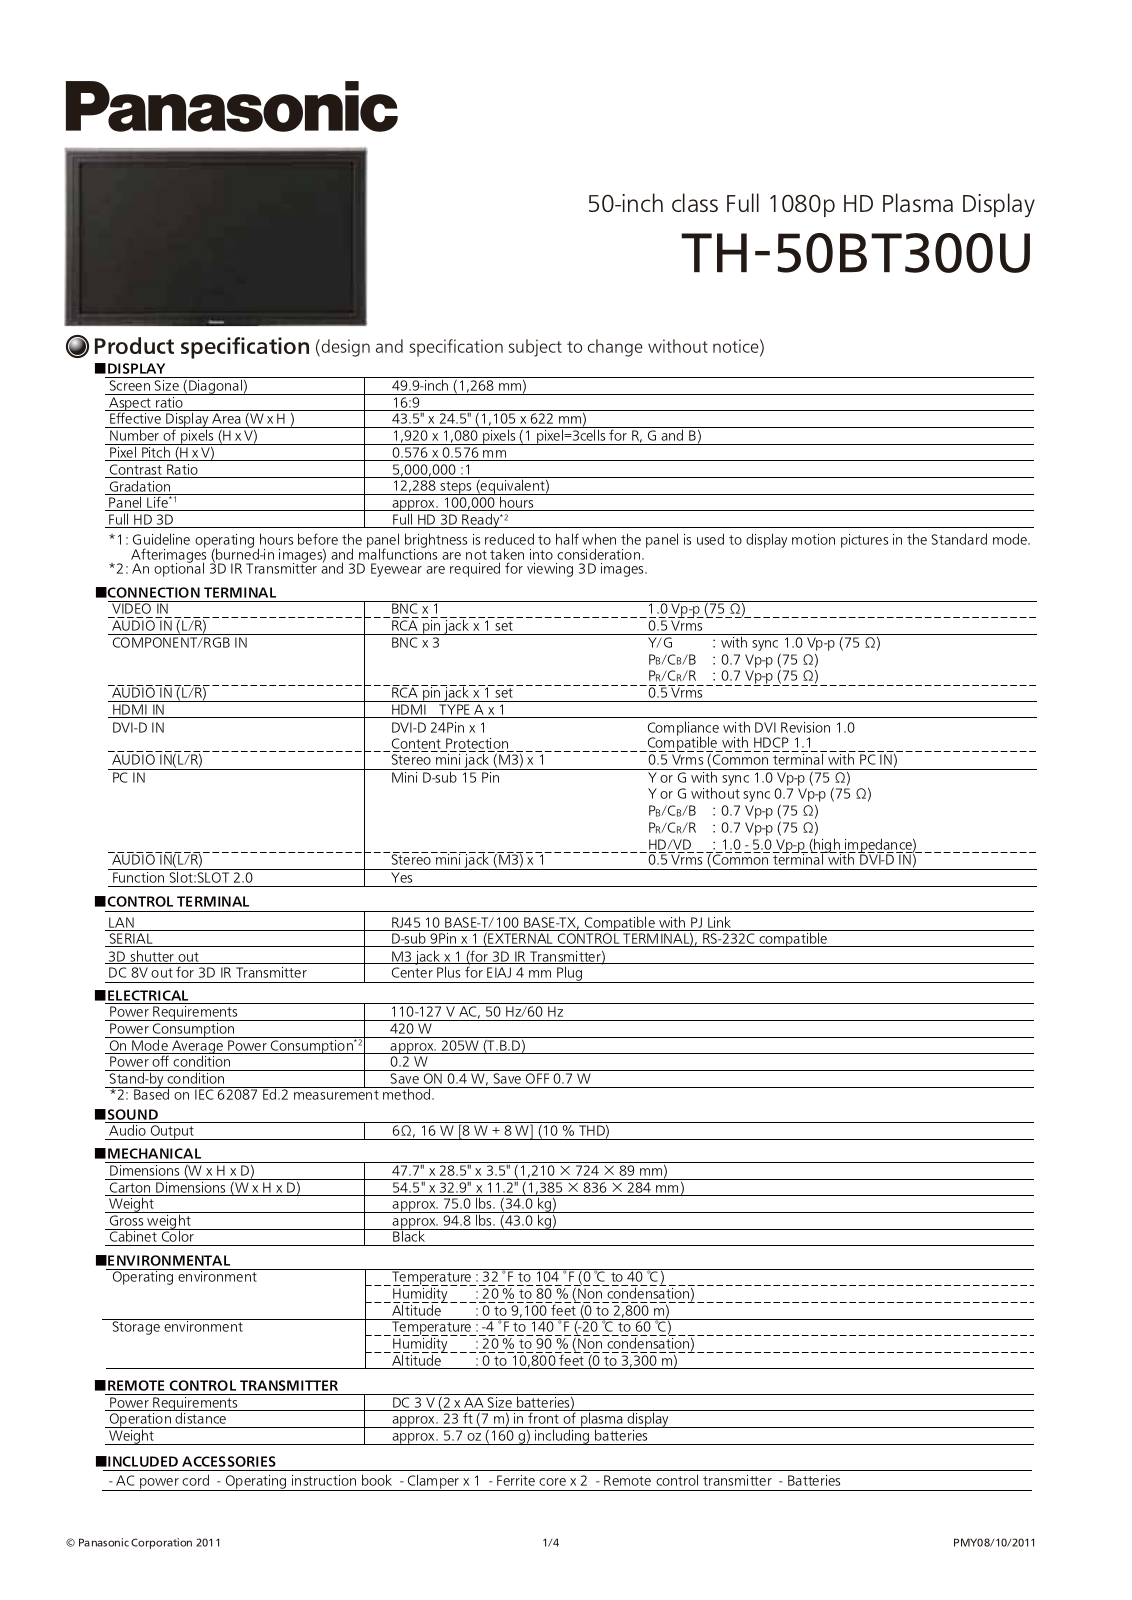 Panasonic TH-50BT300U Specification